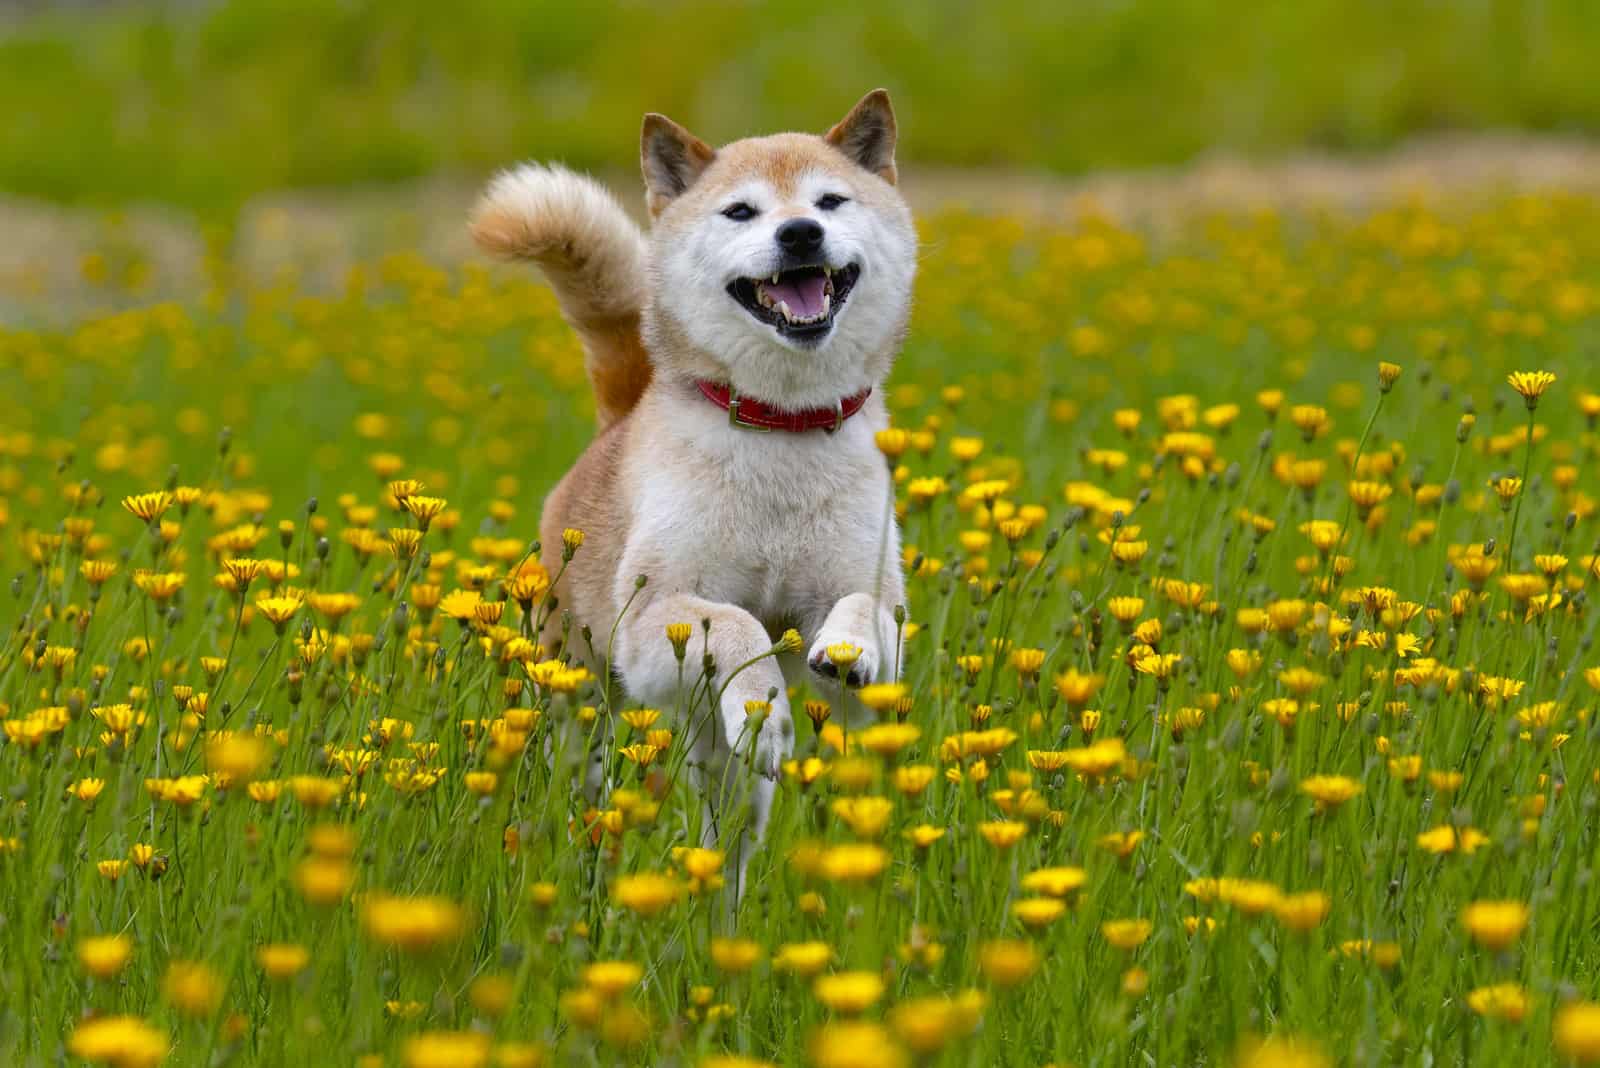 Shiba Inu runs across the field